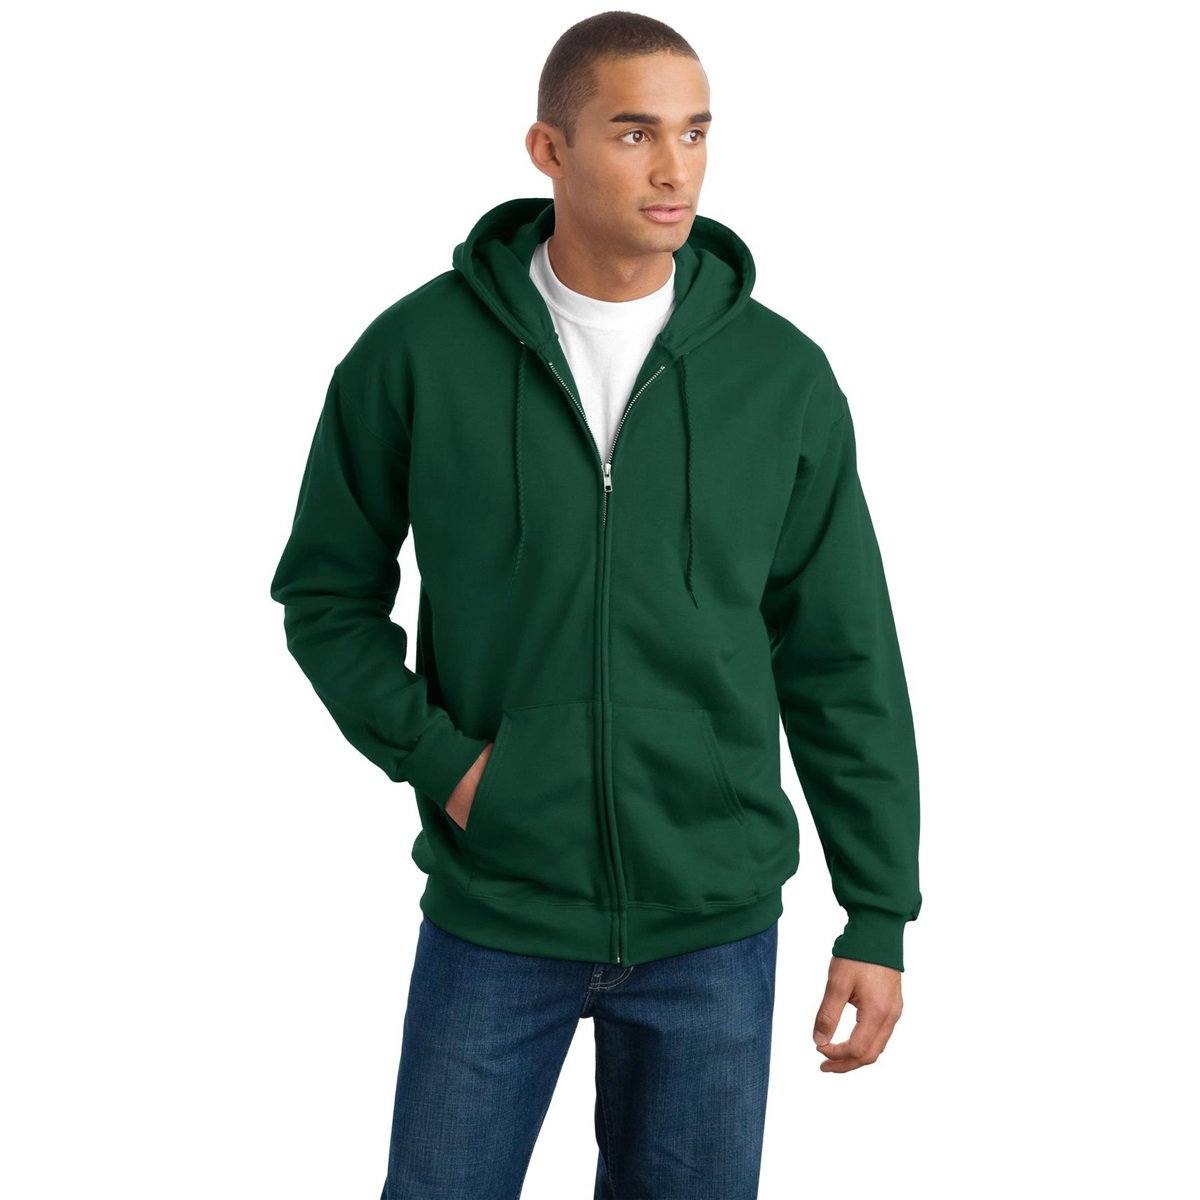 Hanes F283 Ultimate Cotton Full-Zip Hooded Sweatshirt - Deep Forest ...